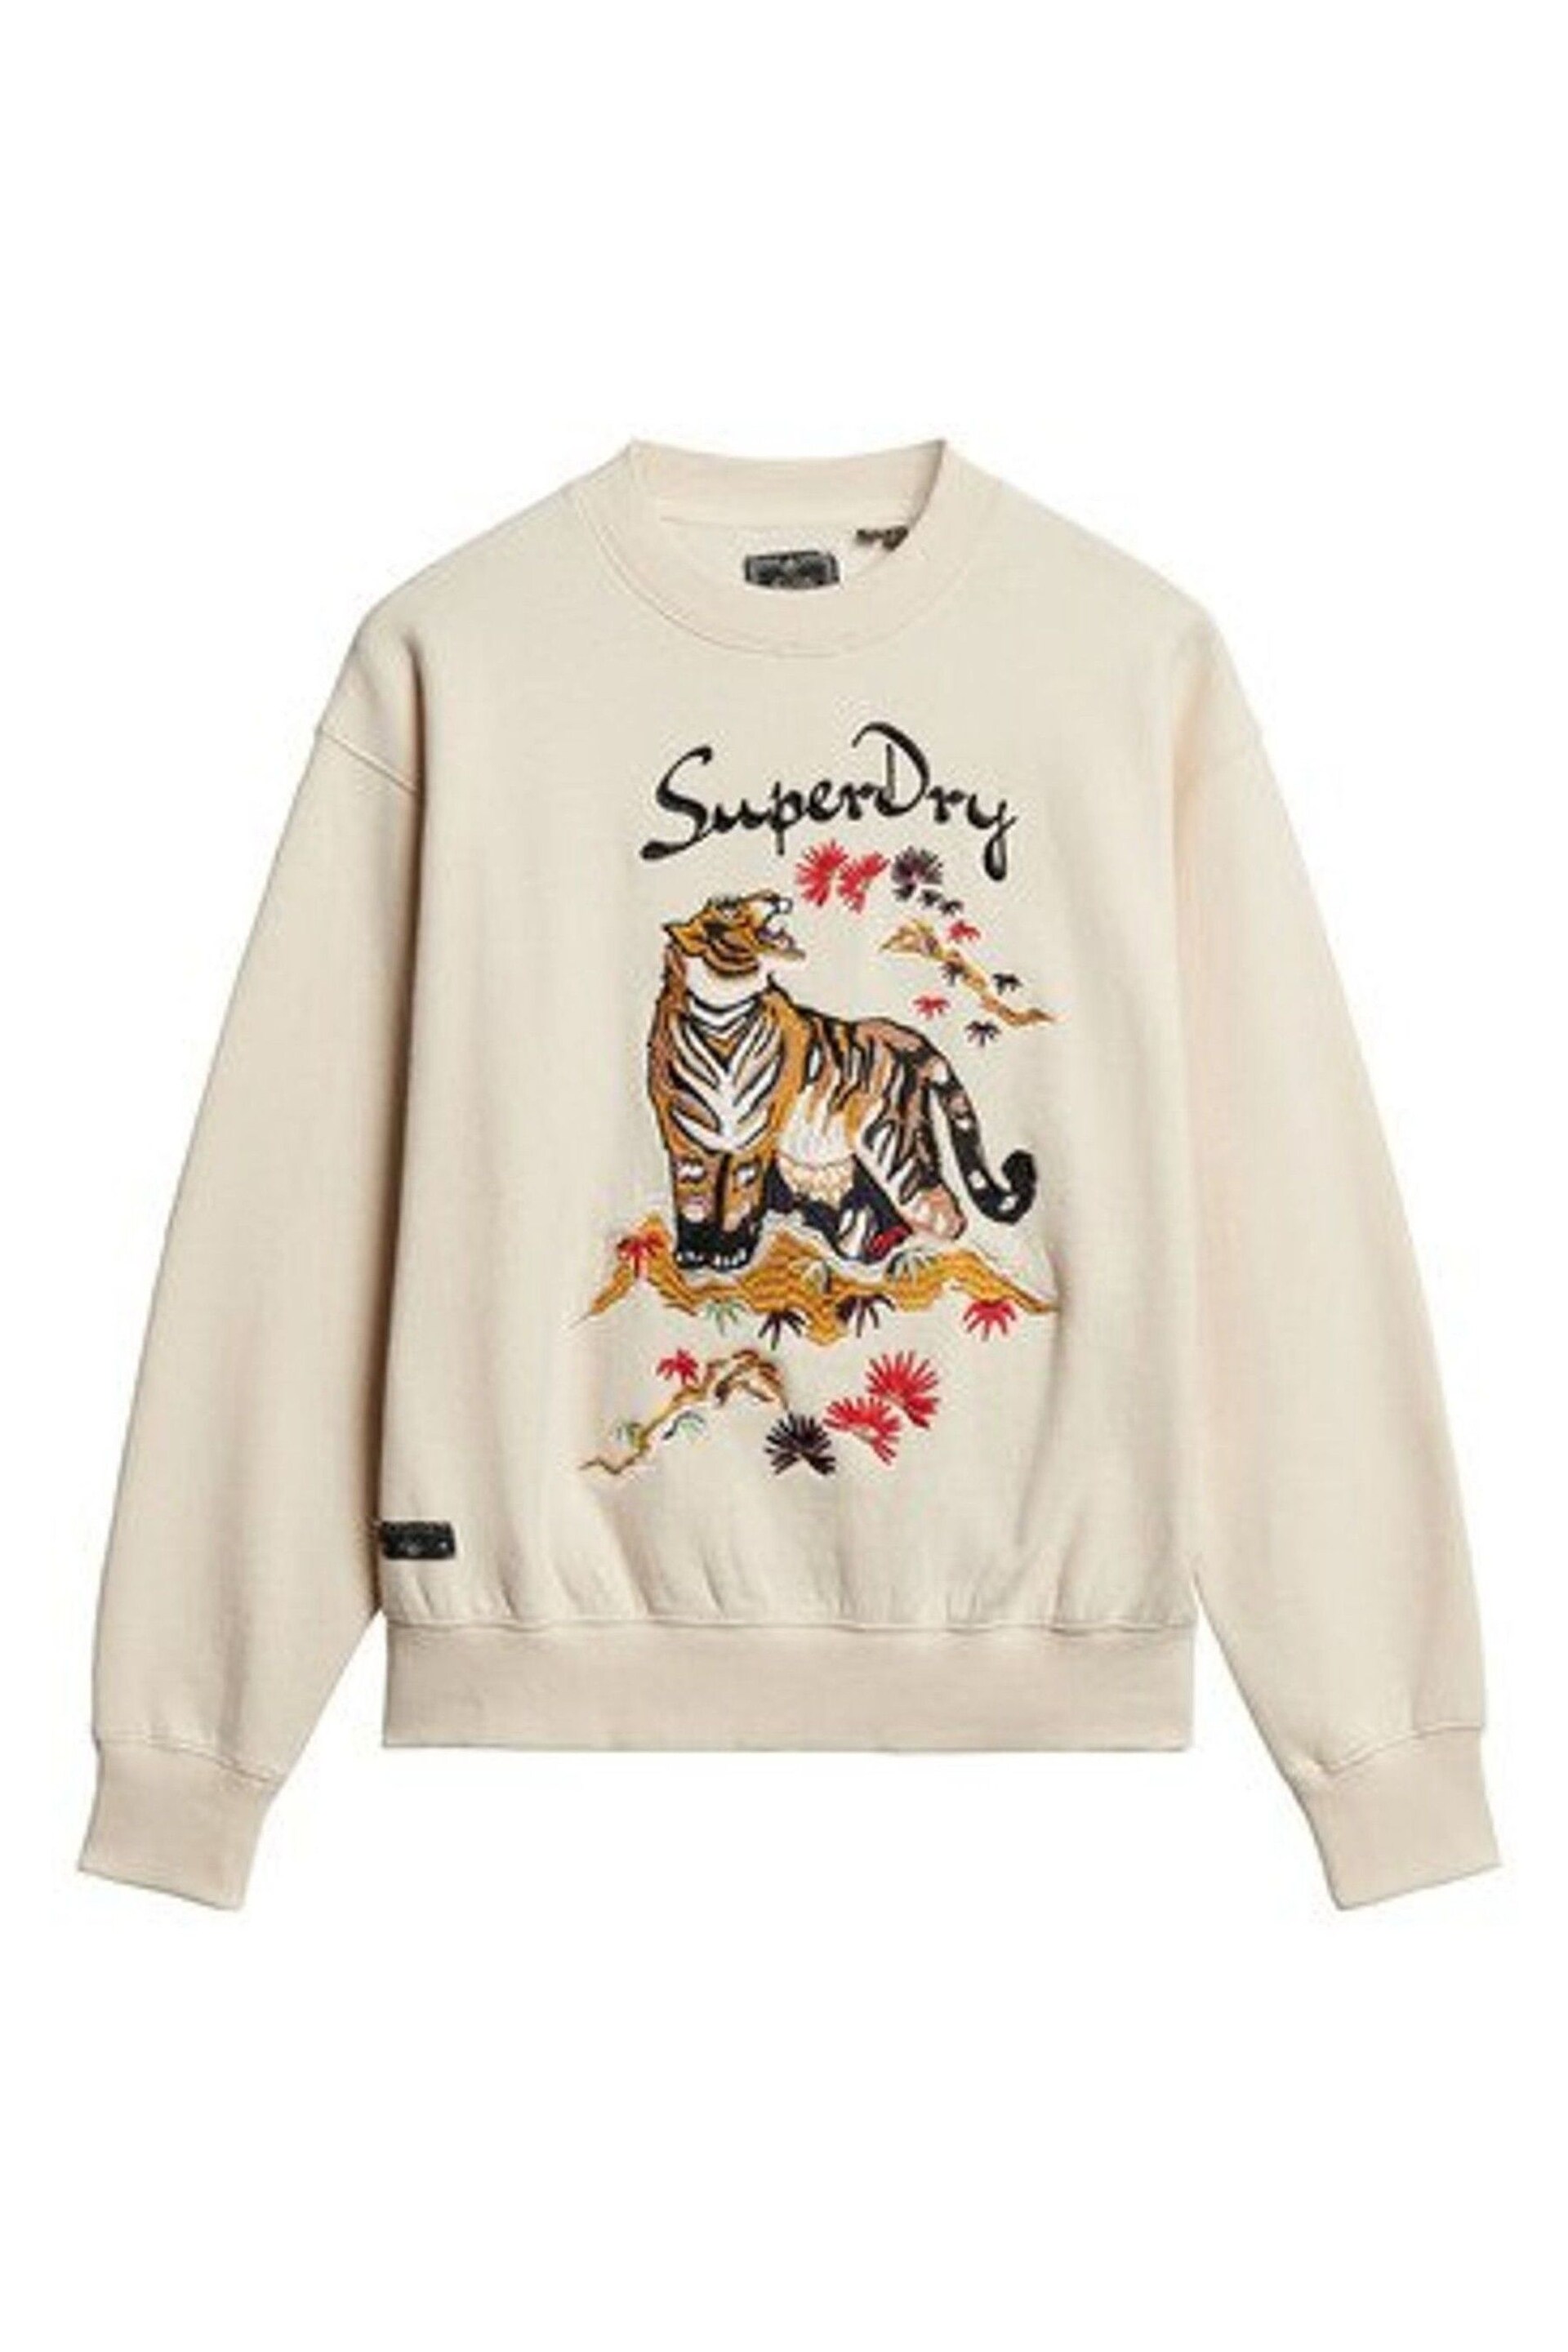 Superdry Cream Suika Embroidered Loose Sweatshirt - Image 4 of 5